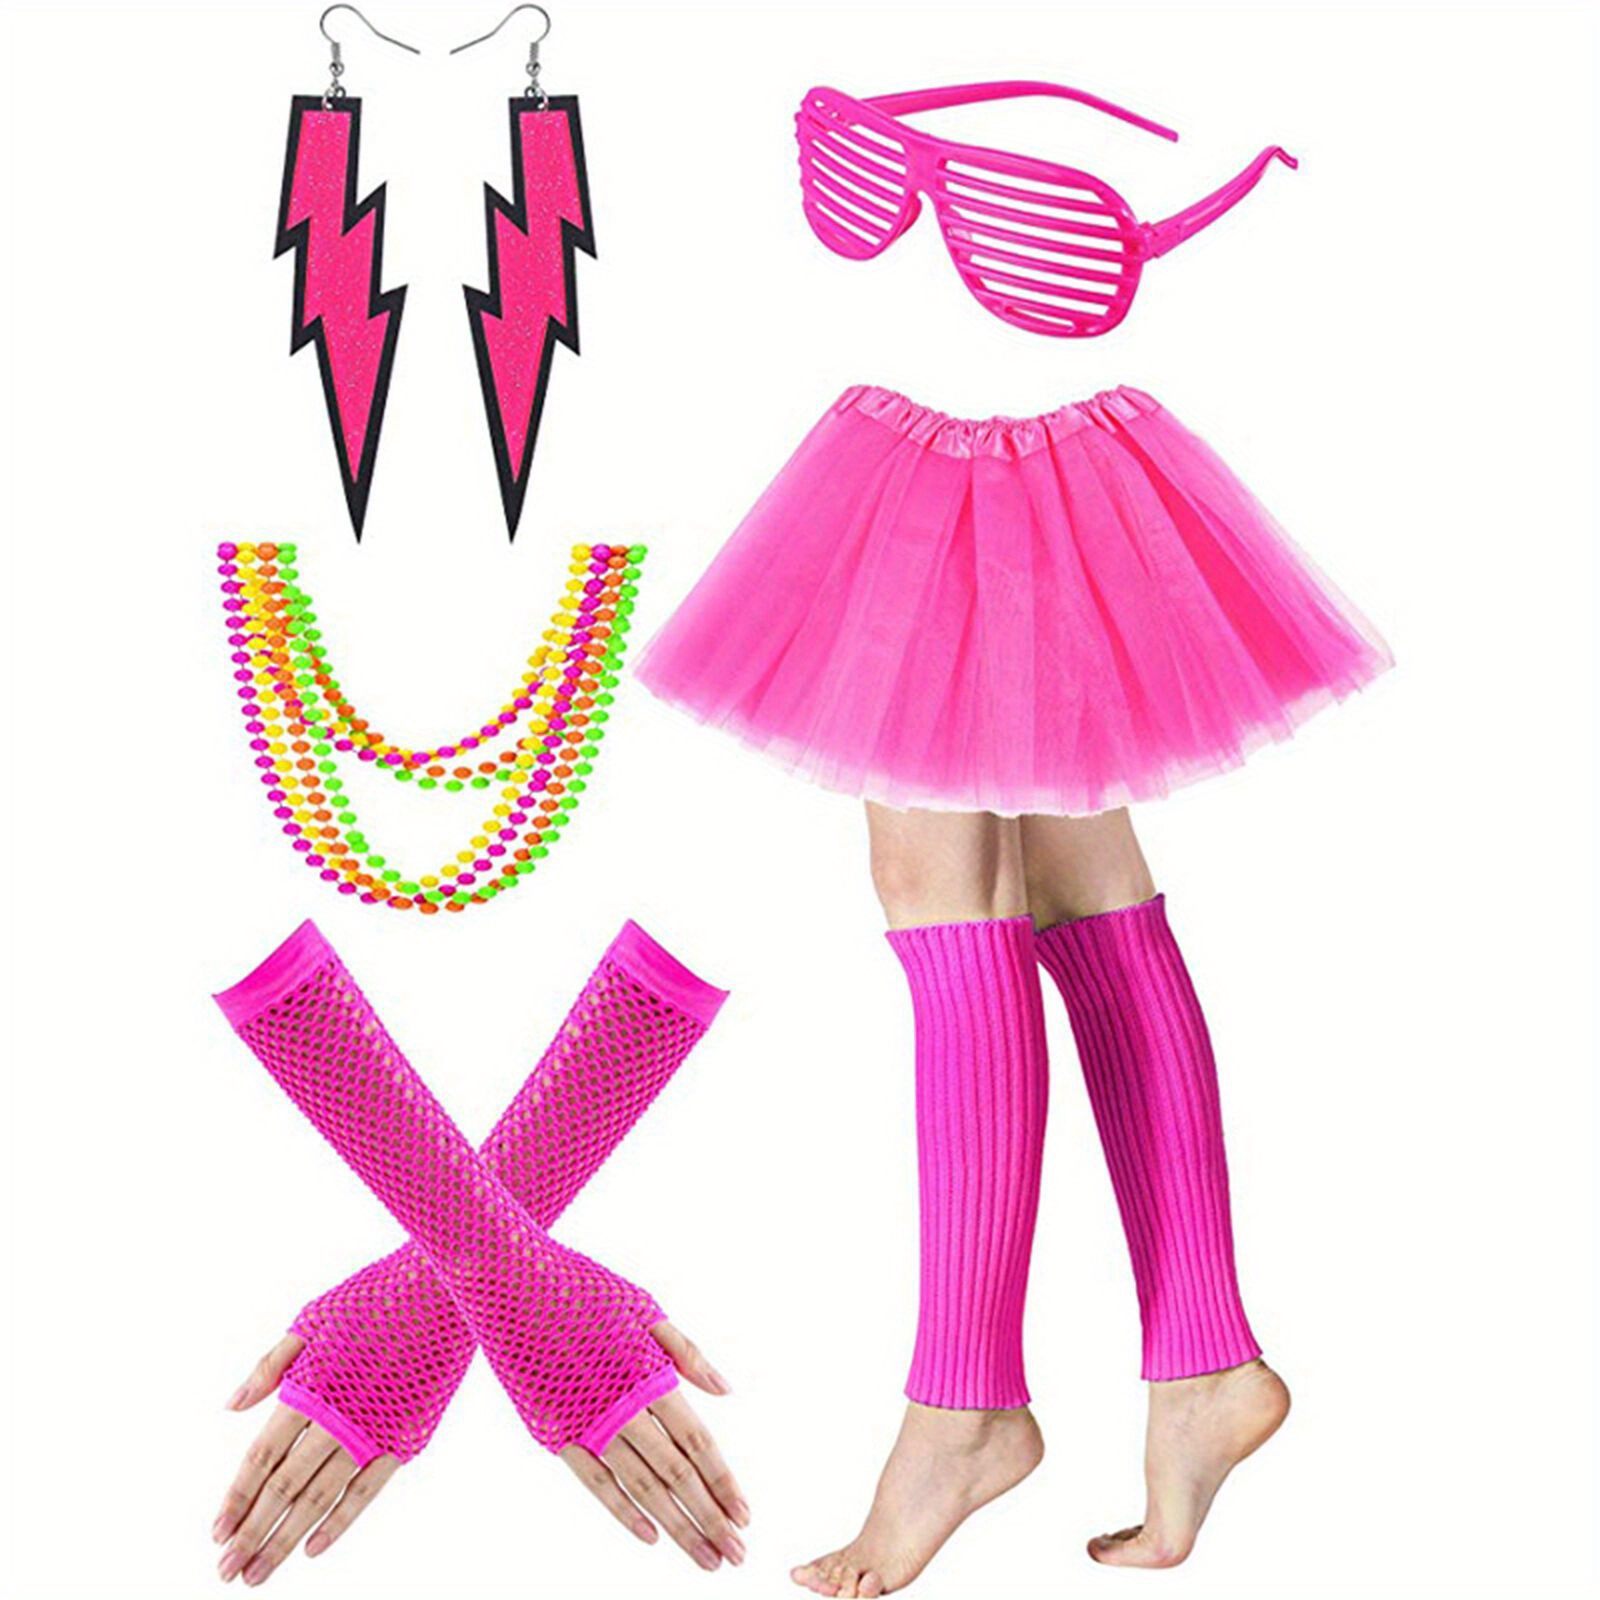 Girls 80s Costumes Accessories Set Neon Leg Warmer 70s Fancy